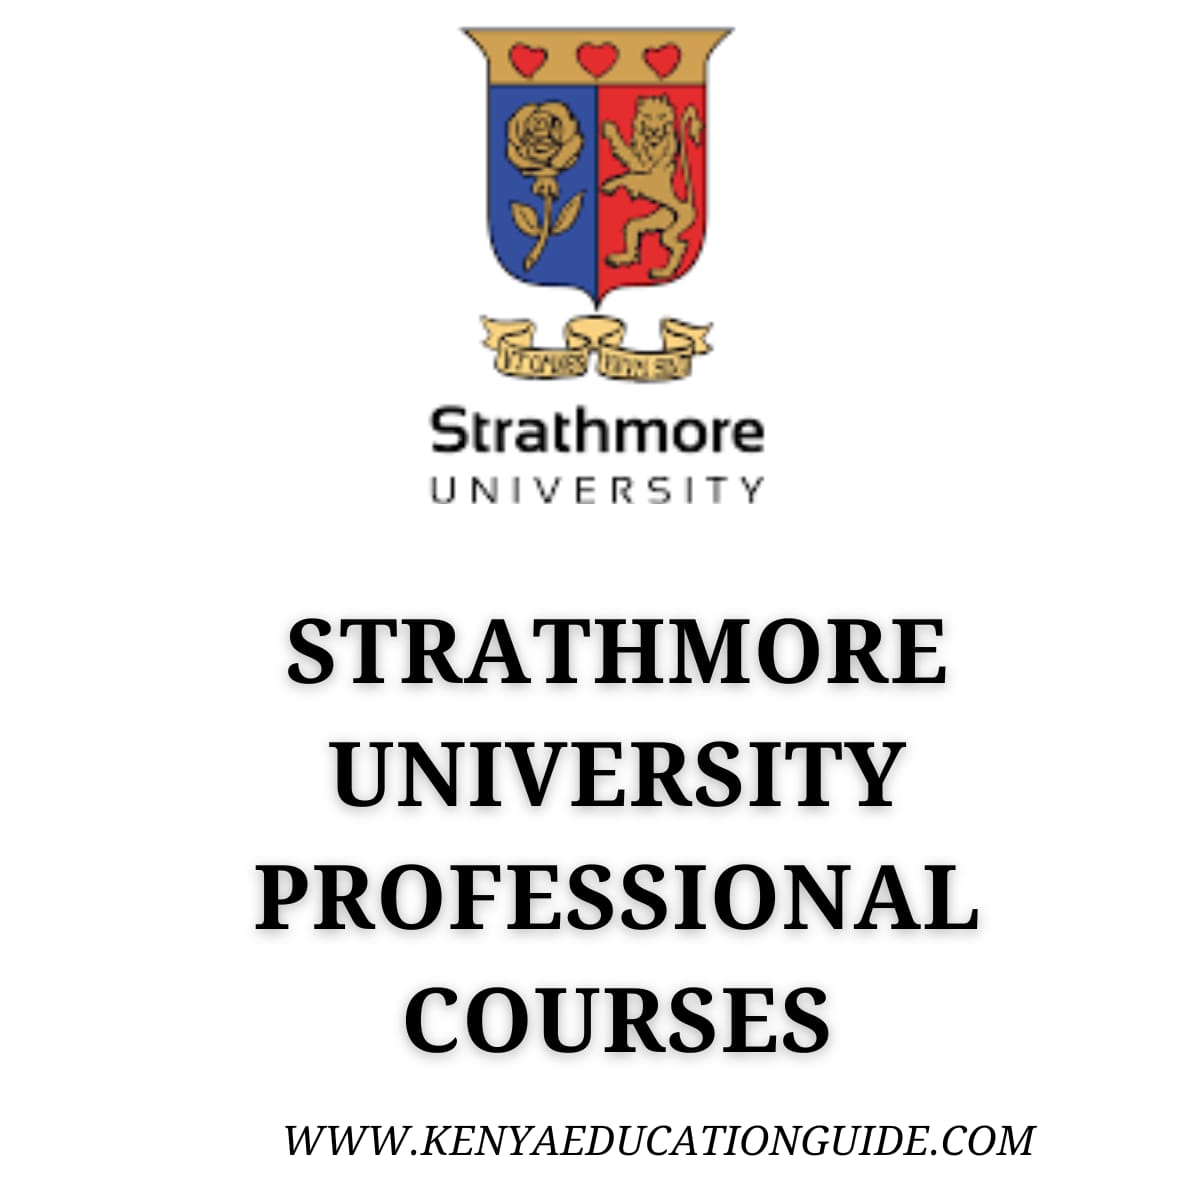 Strathmore University Professional Courses